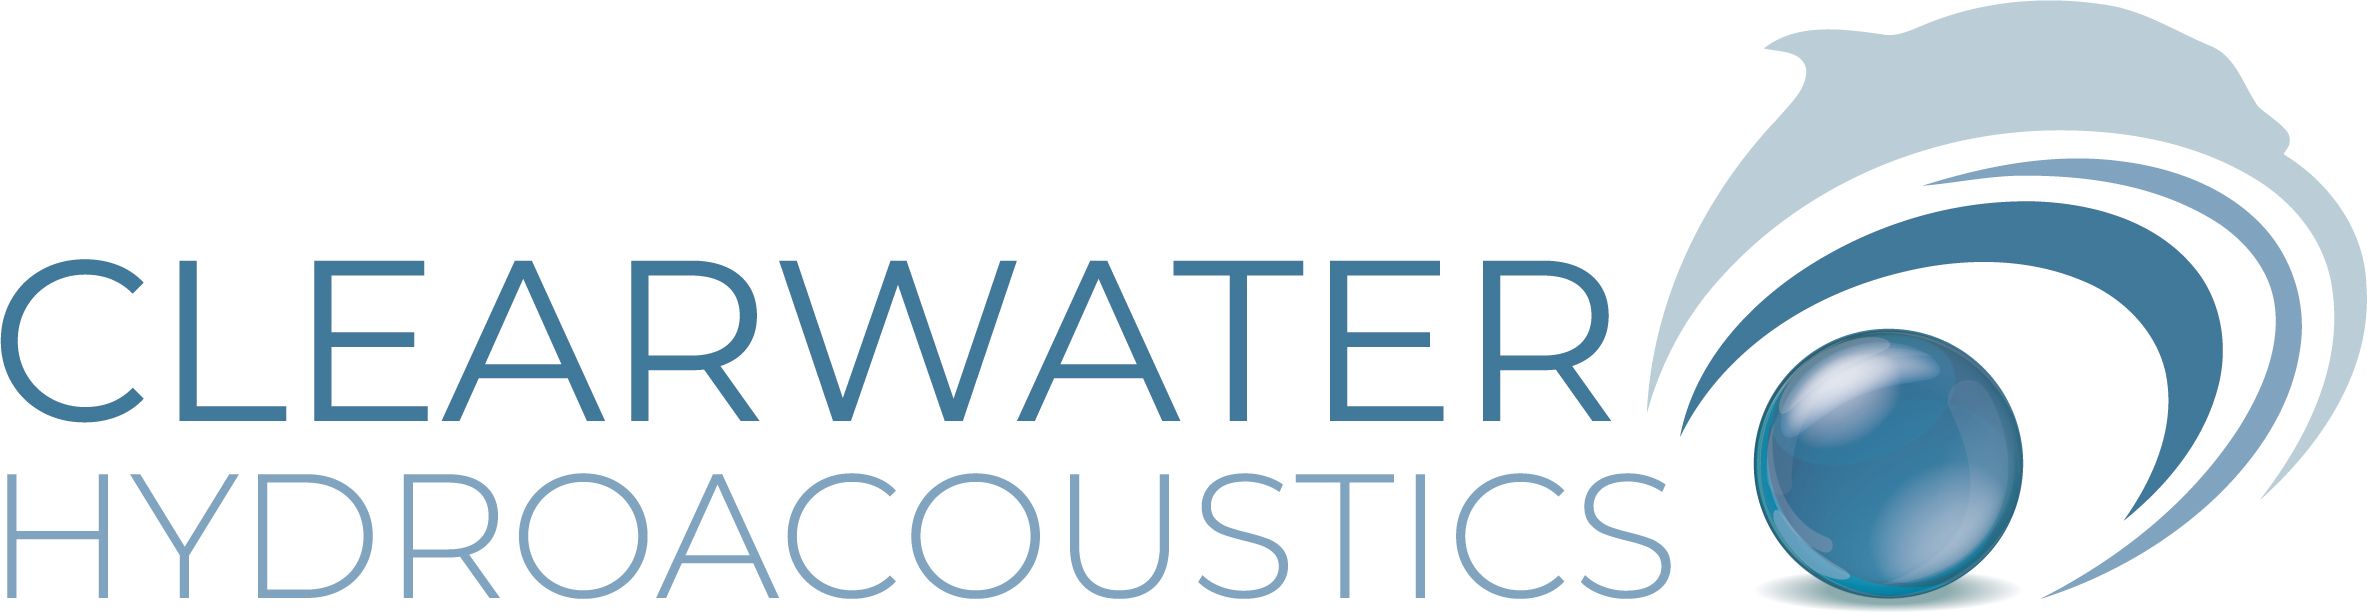 Clearwater Hydroacoustics Ltd